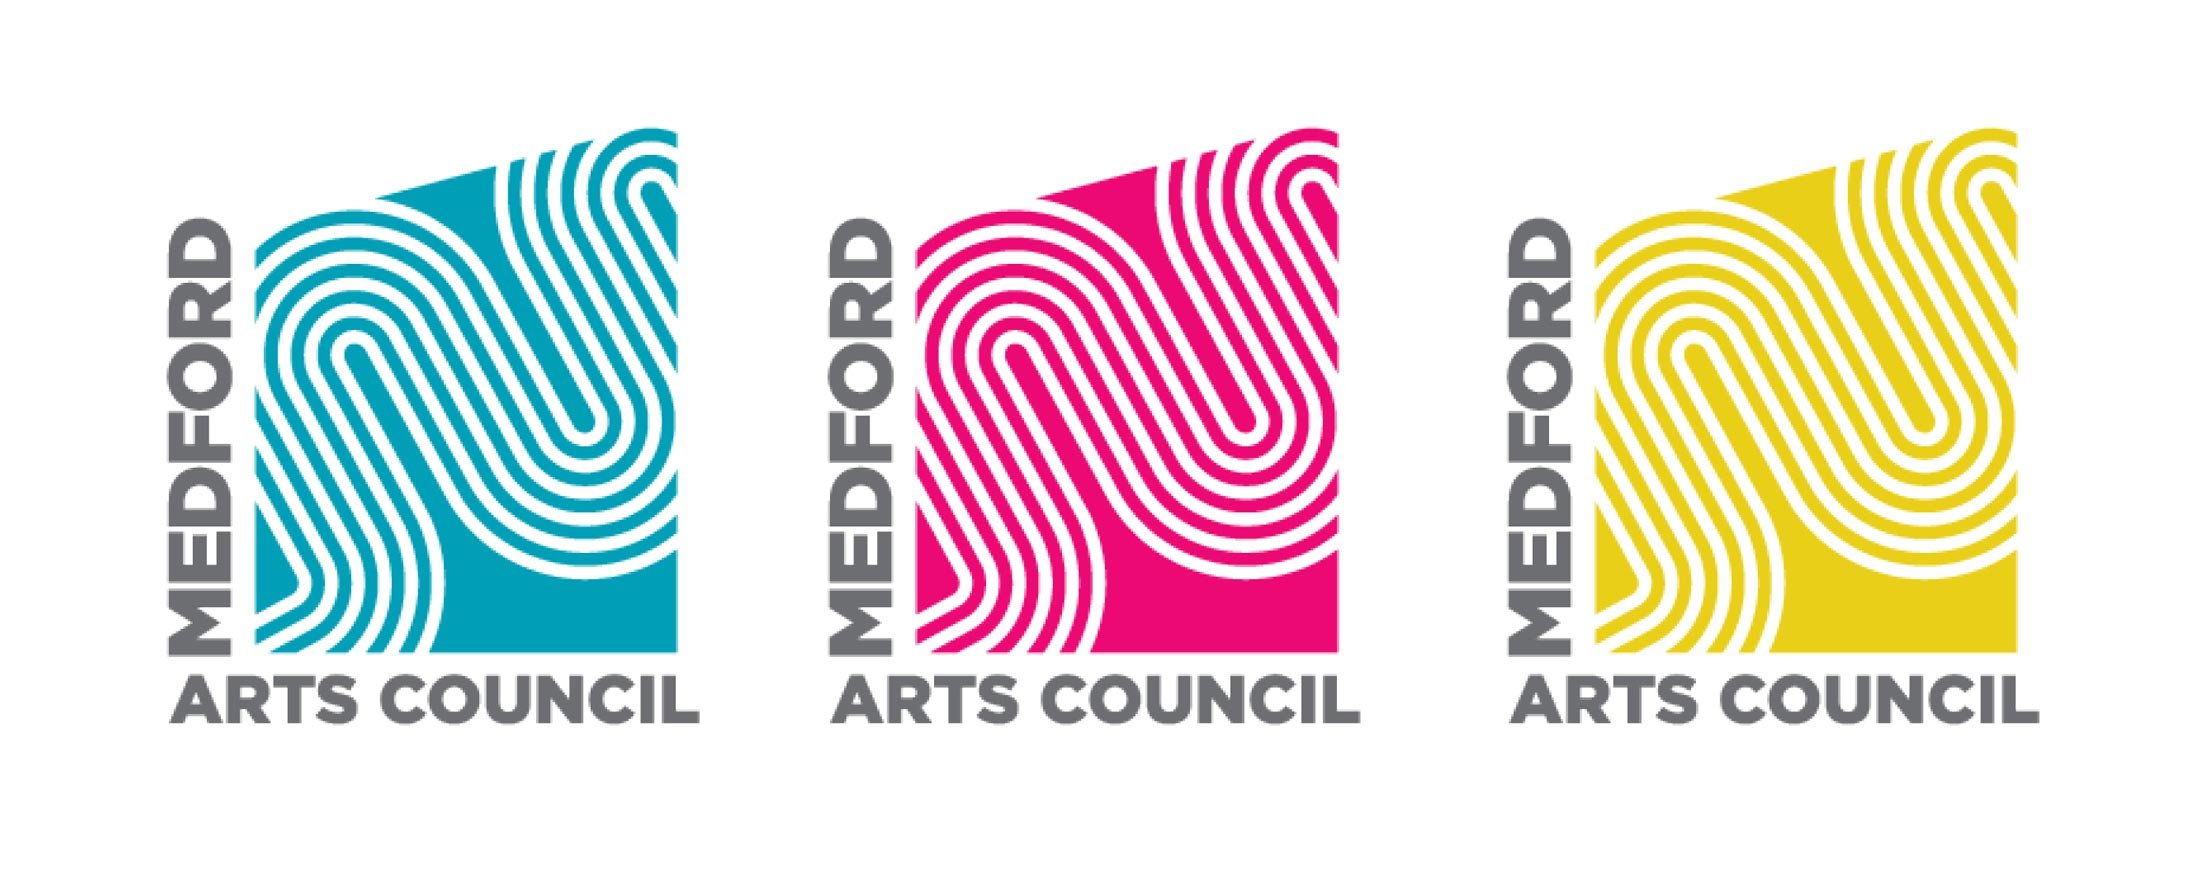 Hero-metford-arts-council-2-1.jpg